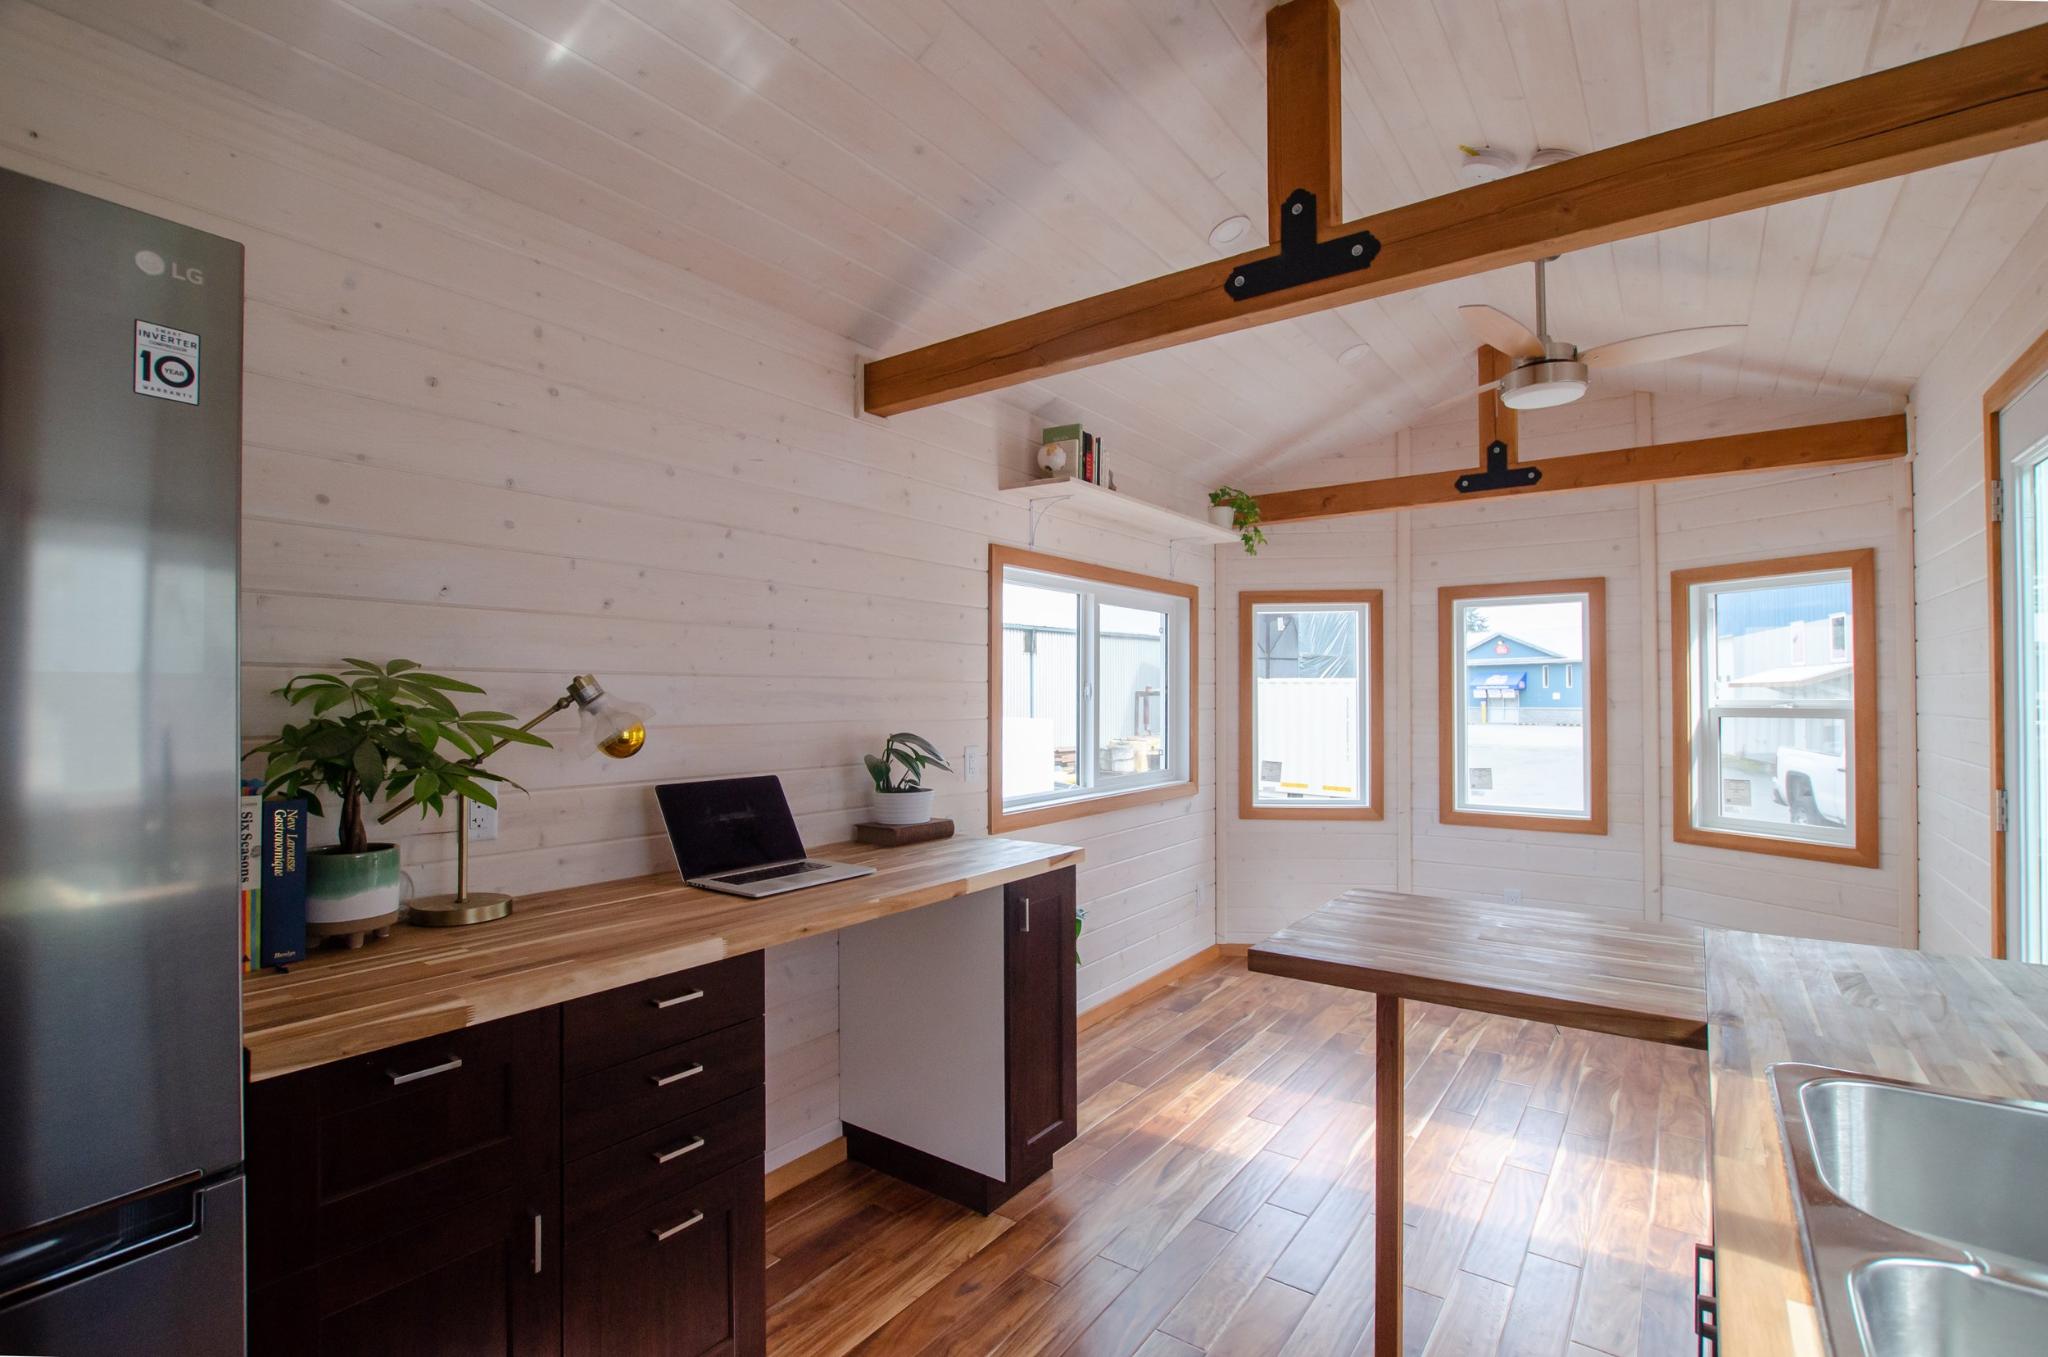 Kitchen & Living Room - The Garry Oak by Rewild Homes